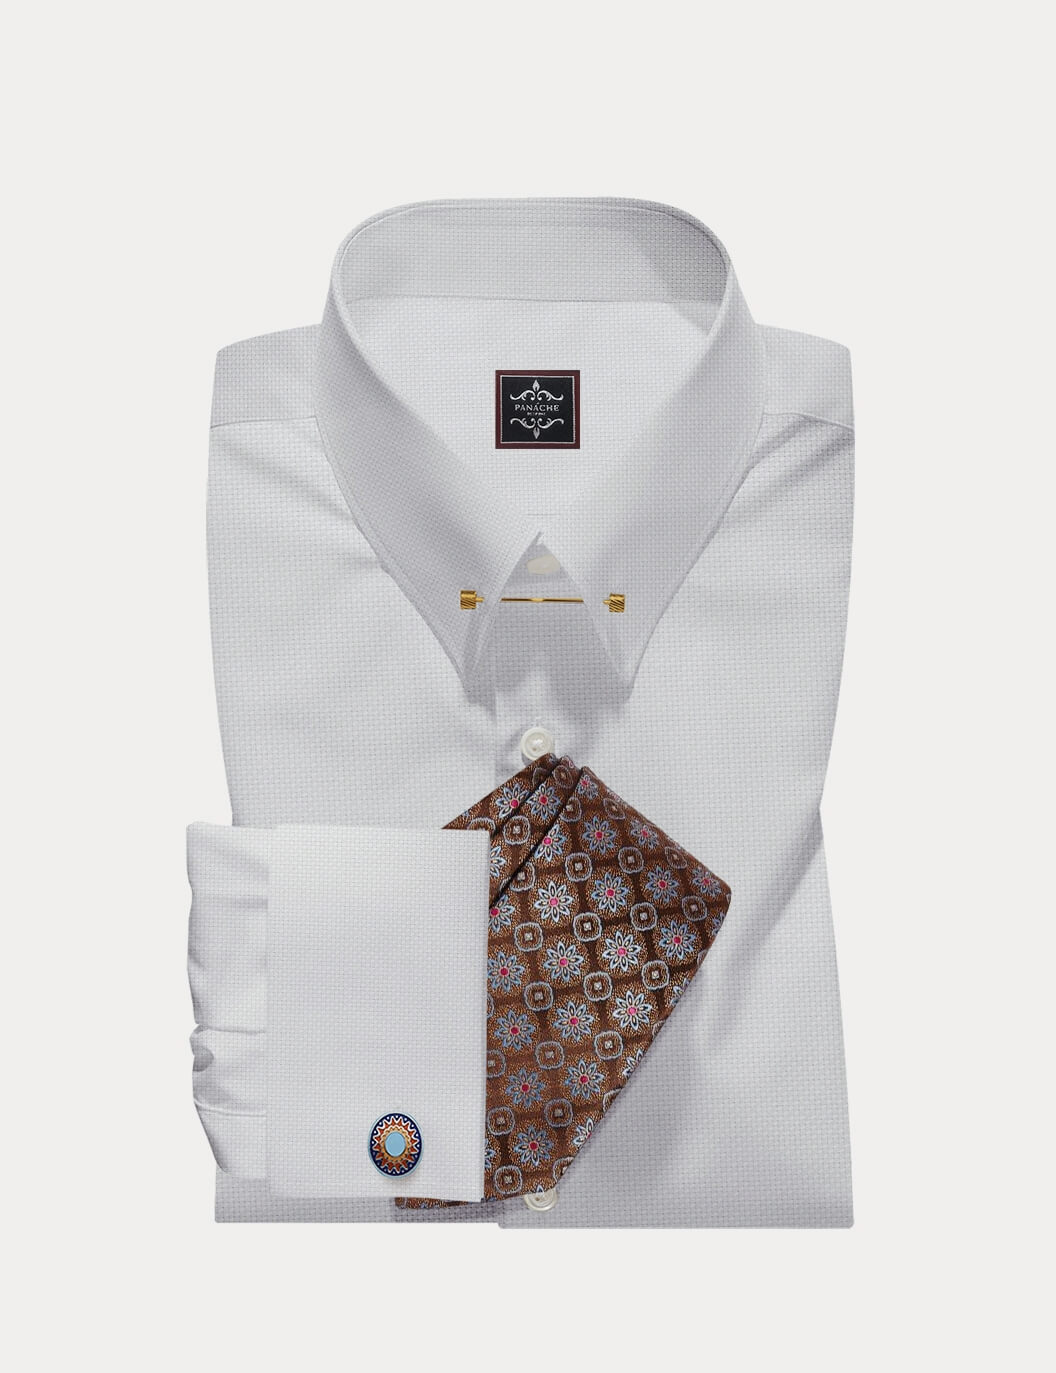 Men dress shirt | Pin Collar shirt | Bespoke shirts | White dress shirt